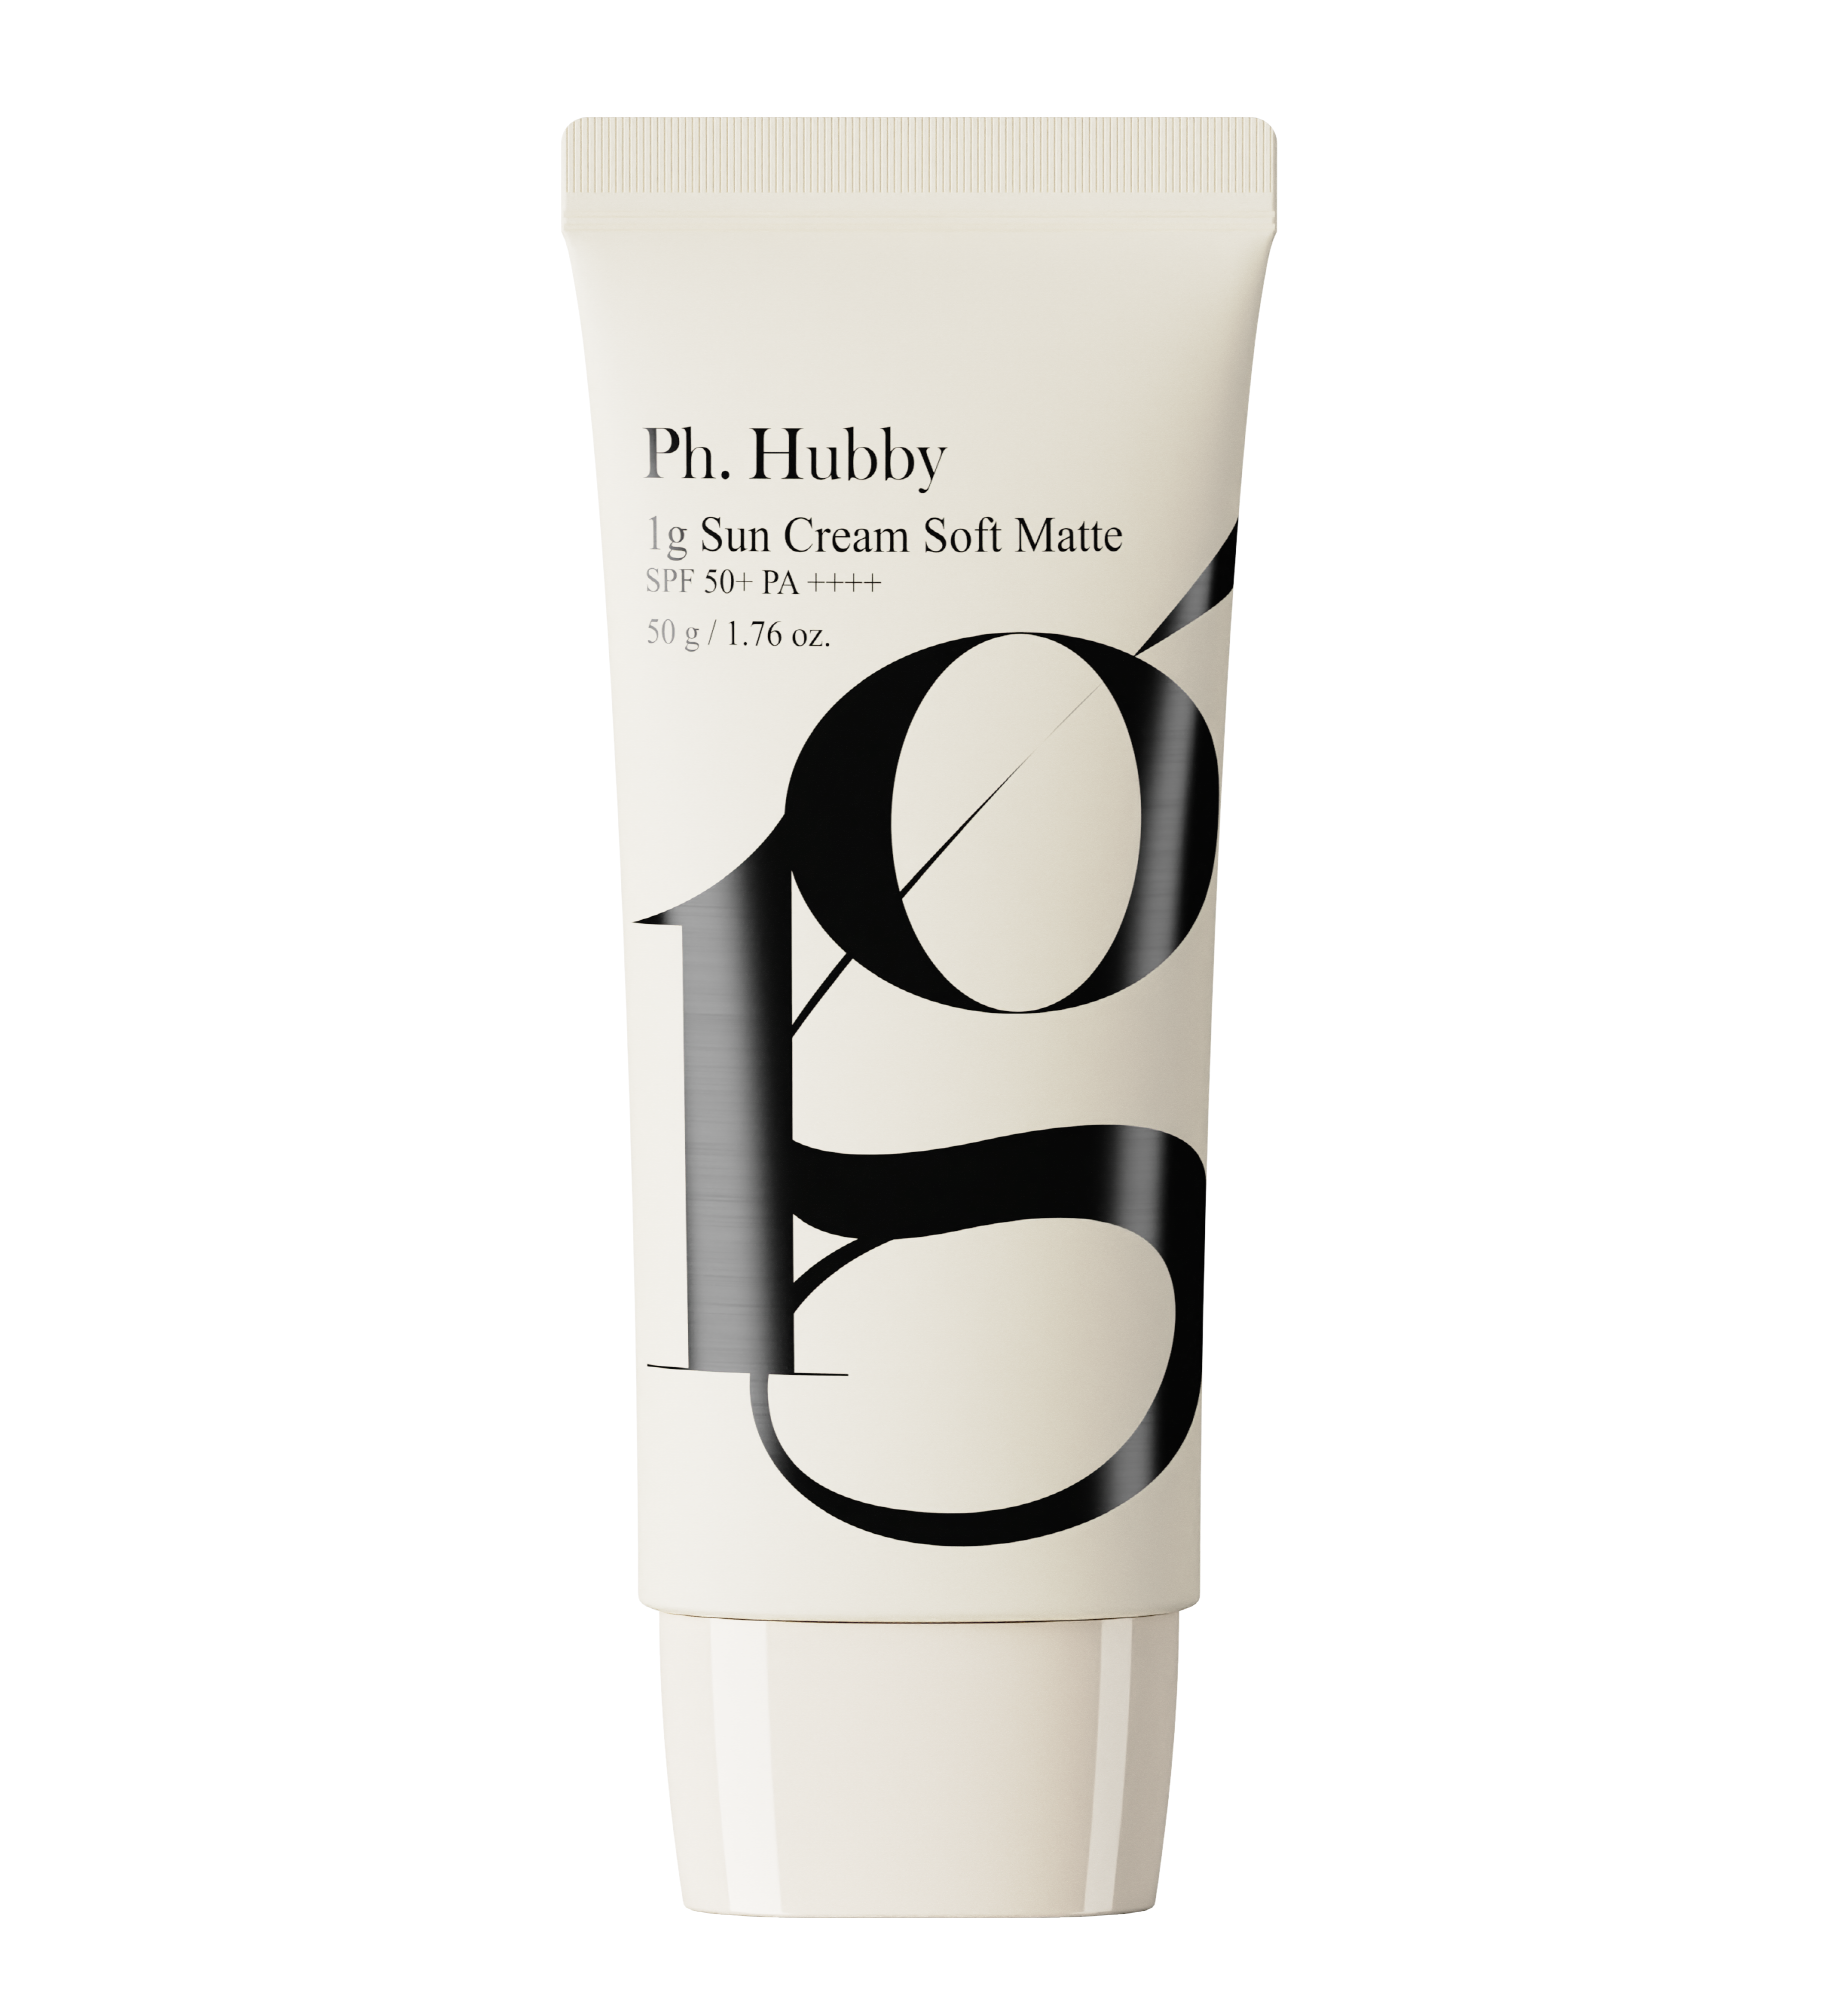 4 Pieces Ph. Hubby 1g Soft Matte Sun Creams Tube Type Whitening SPF50+ PA++++ 50ml No White Cast Facial Sunscreens Skincare Sunblock UV Face Body Neck